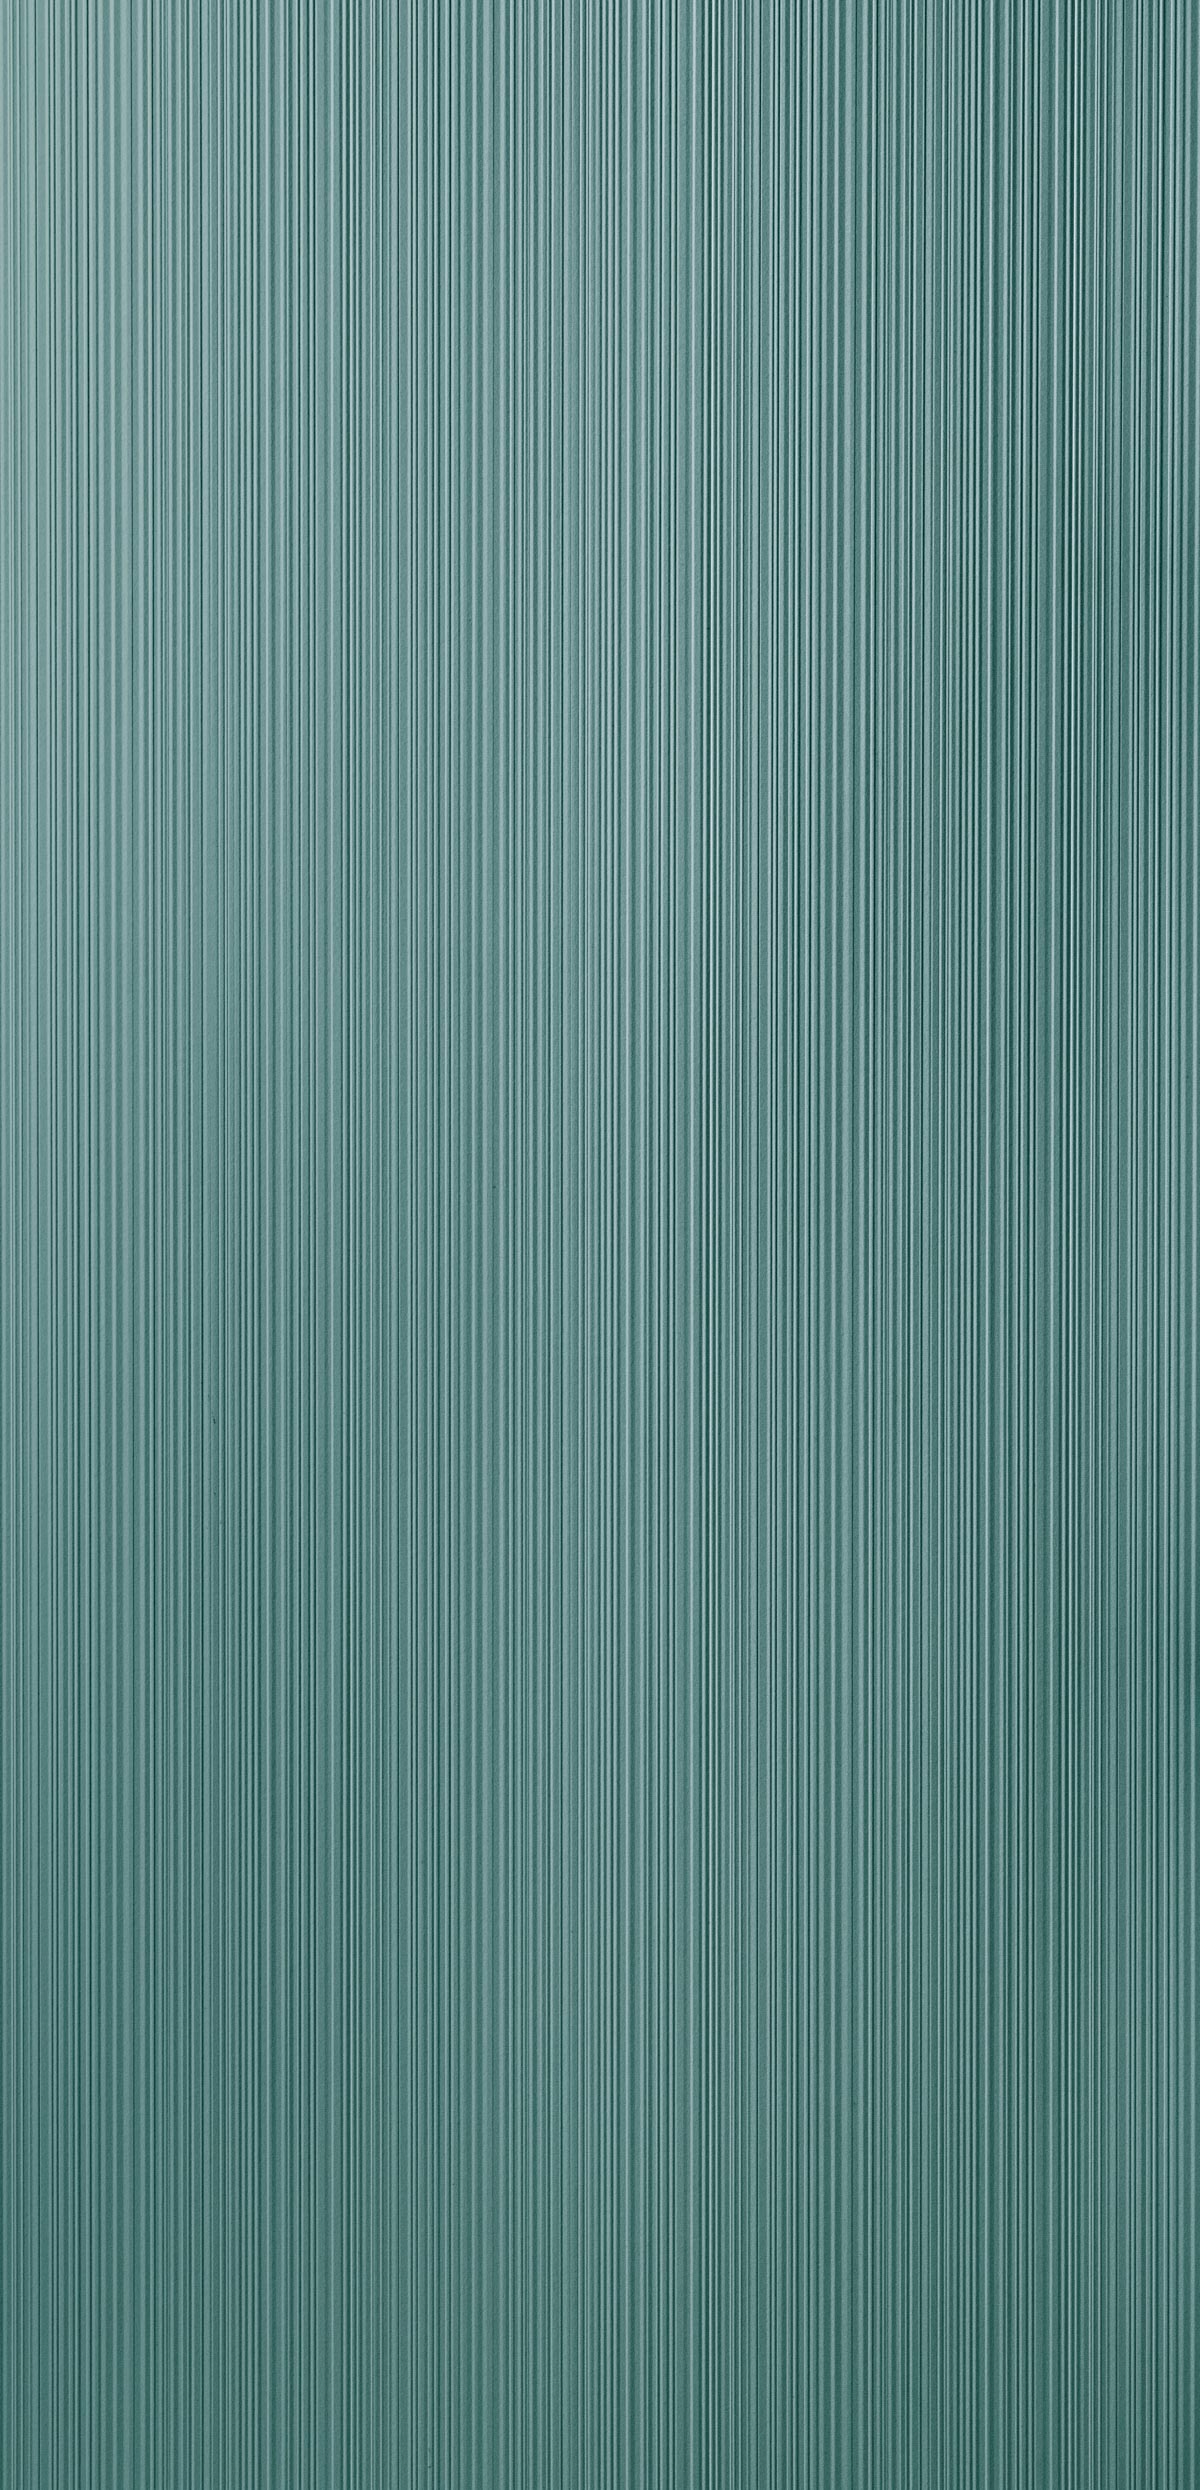 Lines Steel blue 015-panel